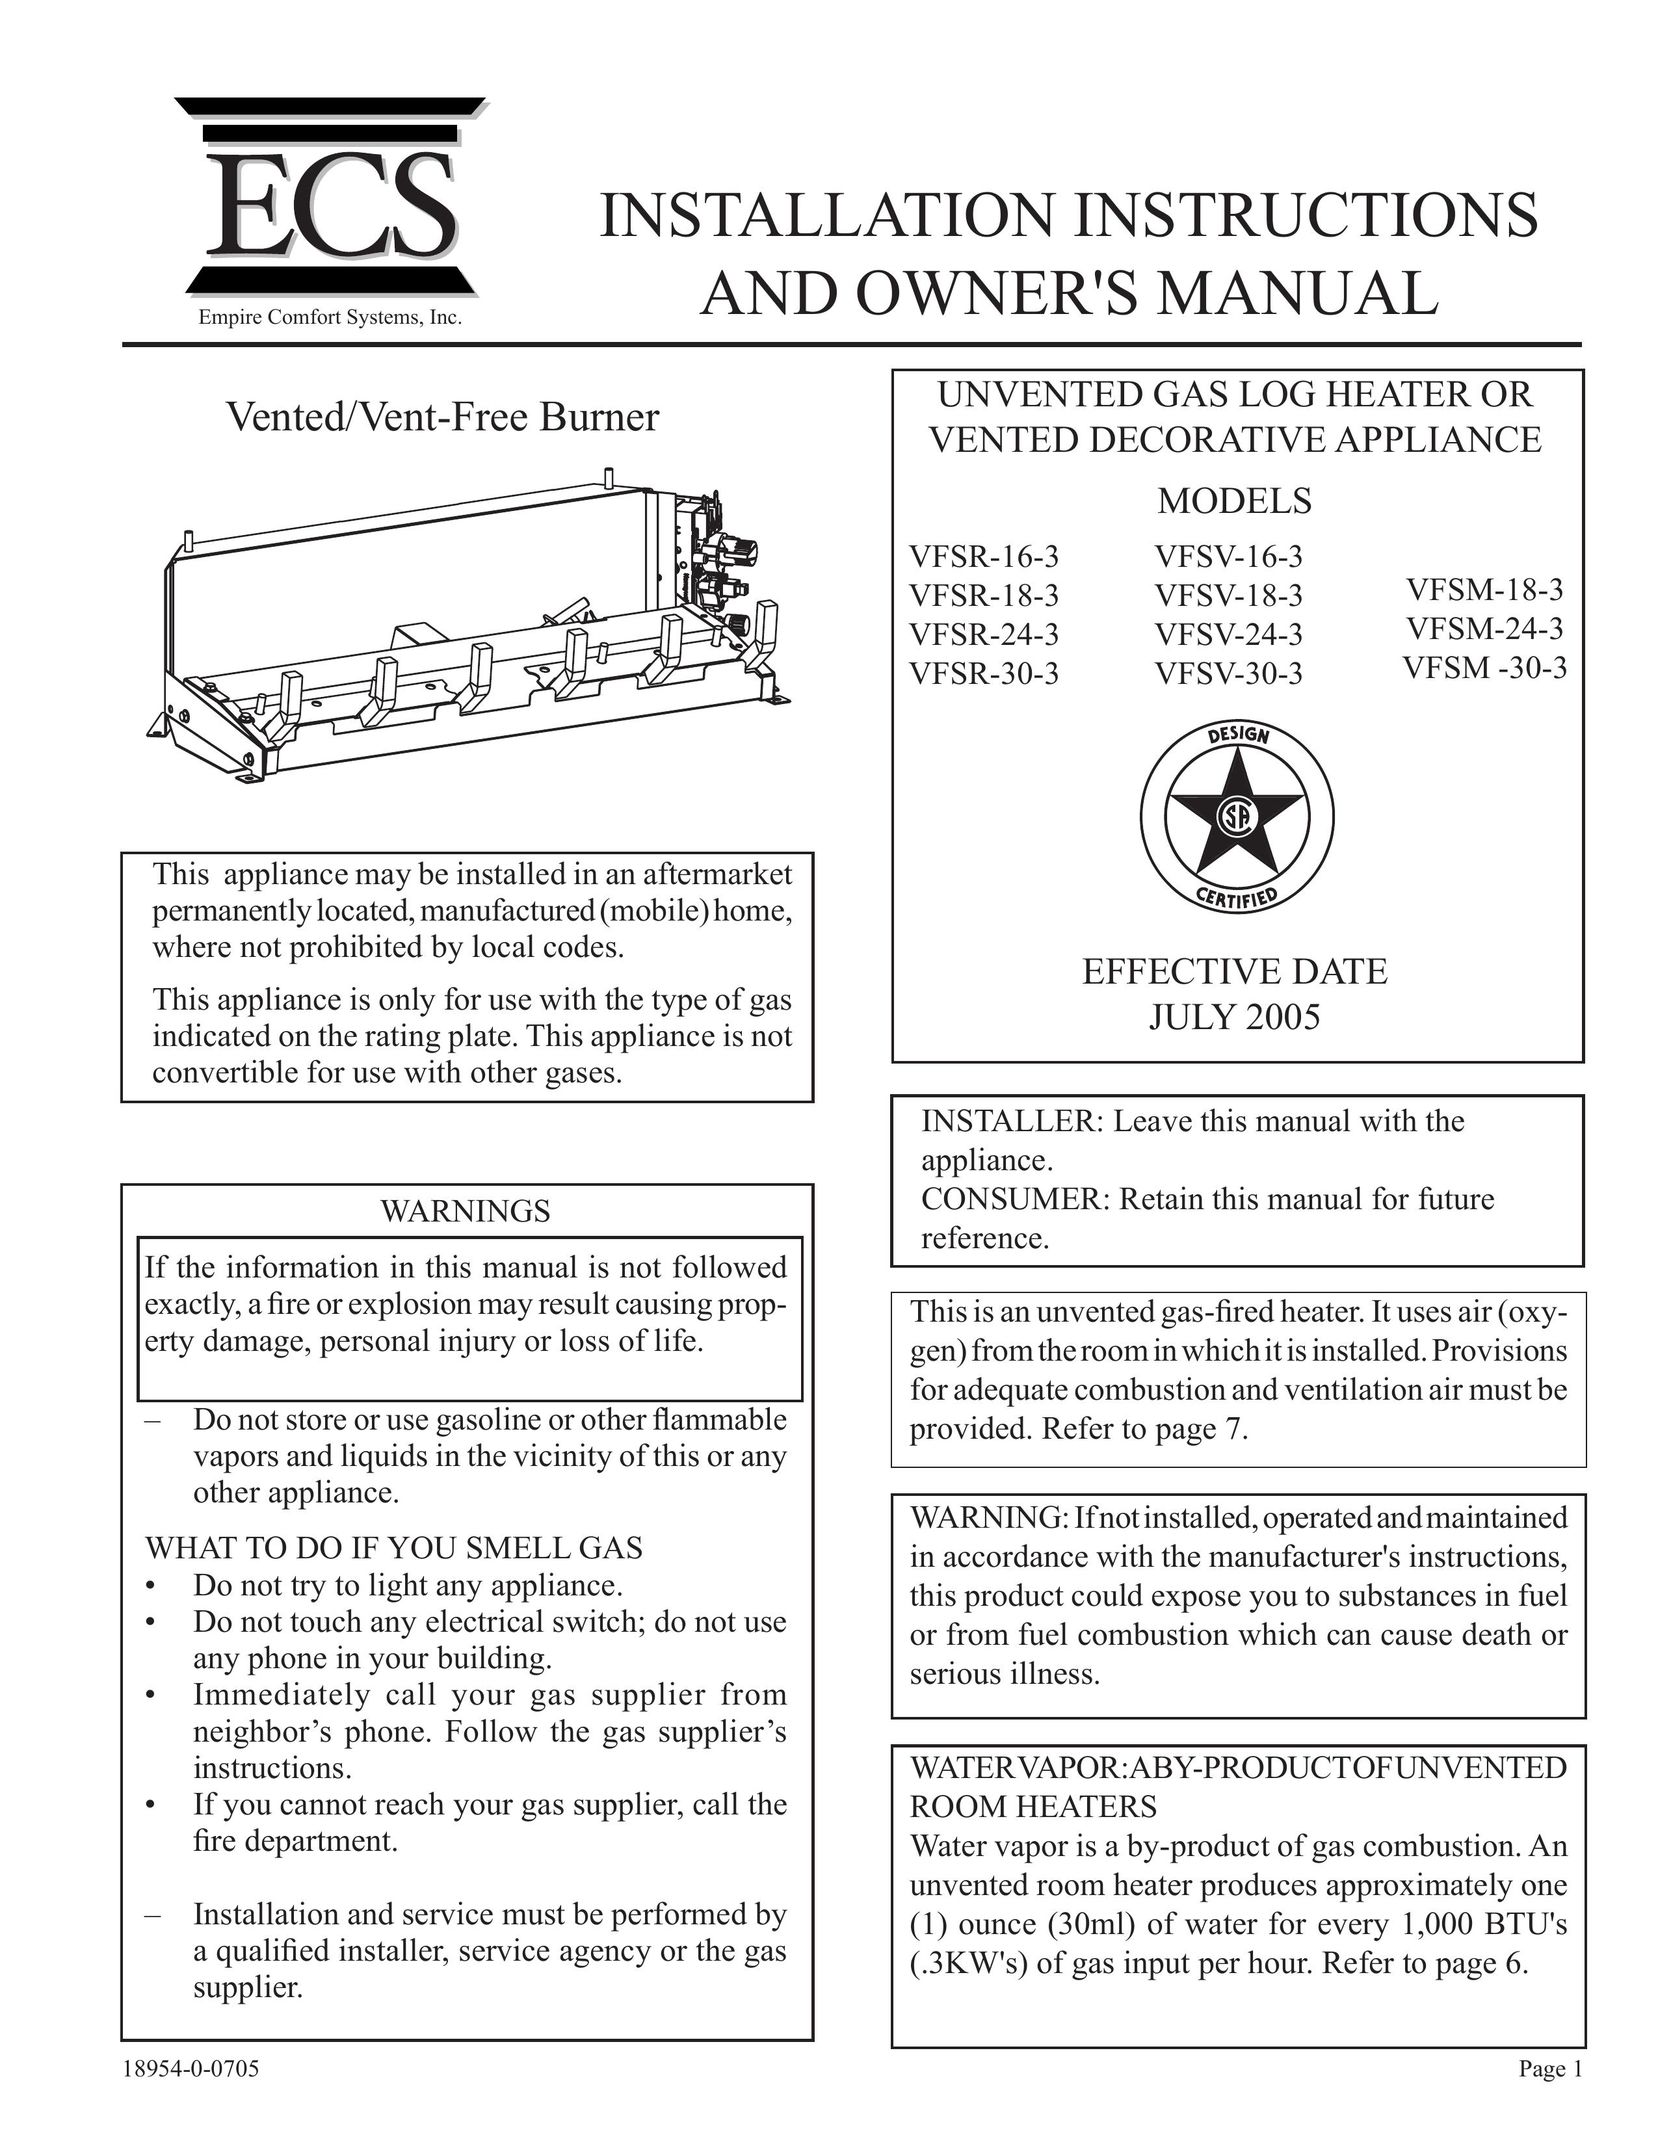 Empire Comfort Systems VFSV-16-3 Electric Heater User Manual